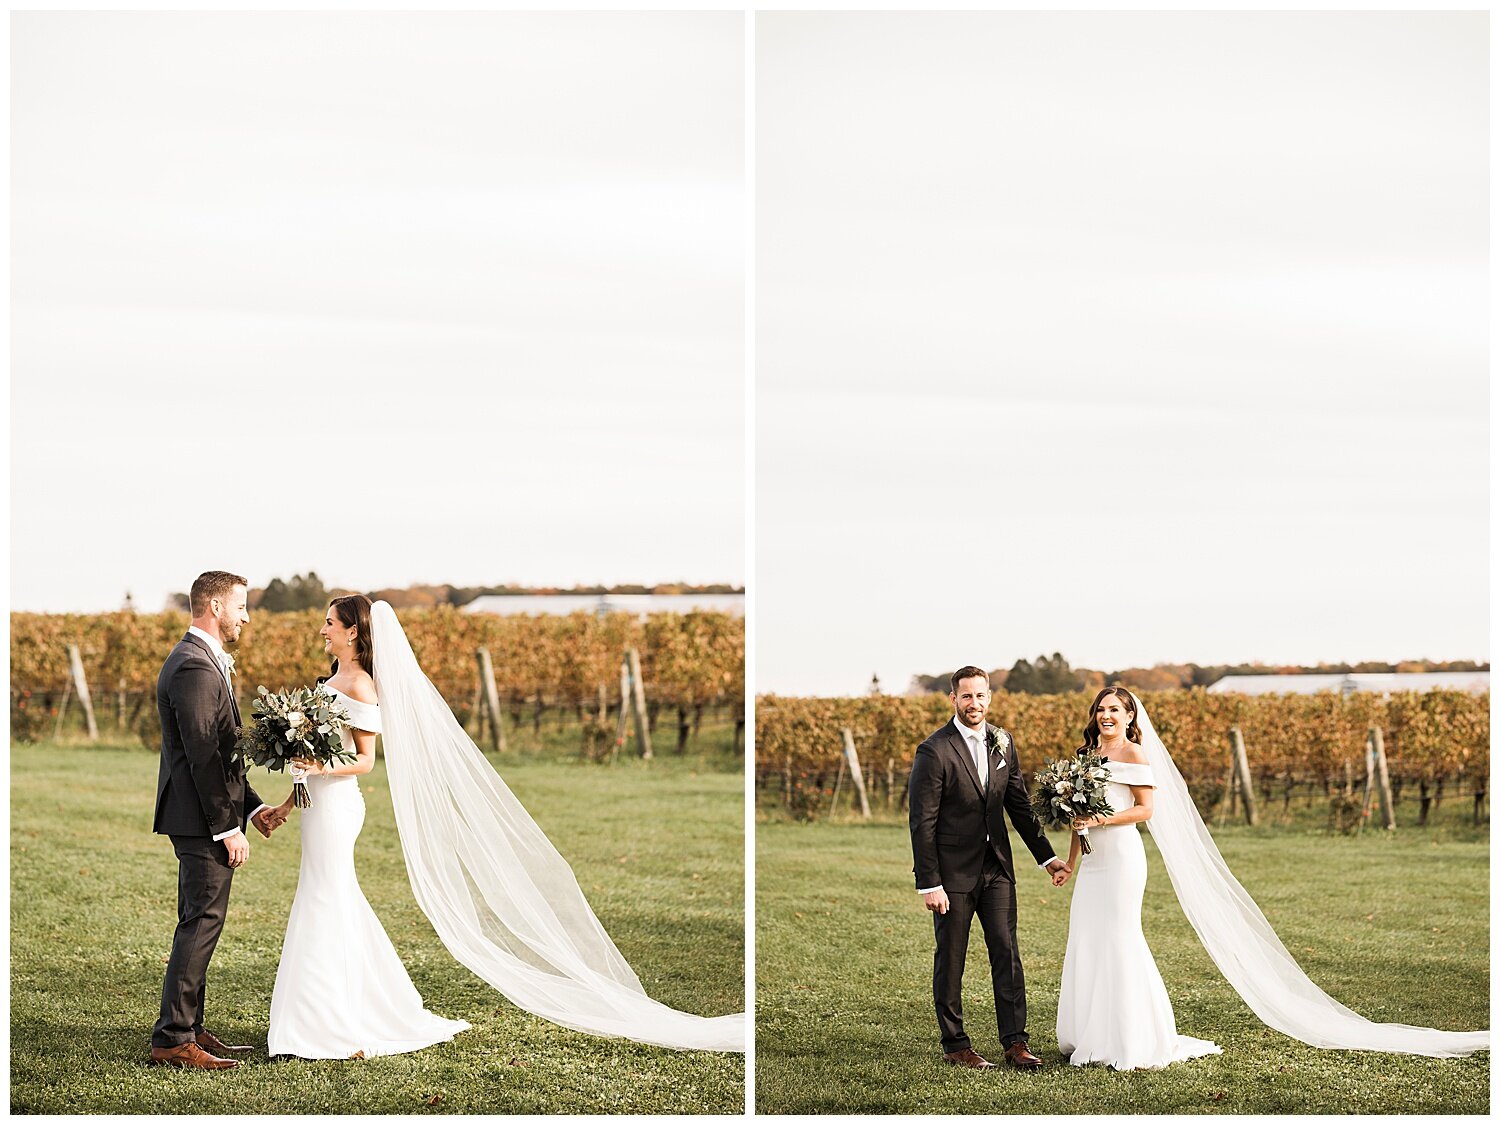 RGNY-Wedding-Photography-North-Fork-Vineyard-Apollo-Fields-022.jpg